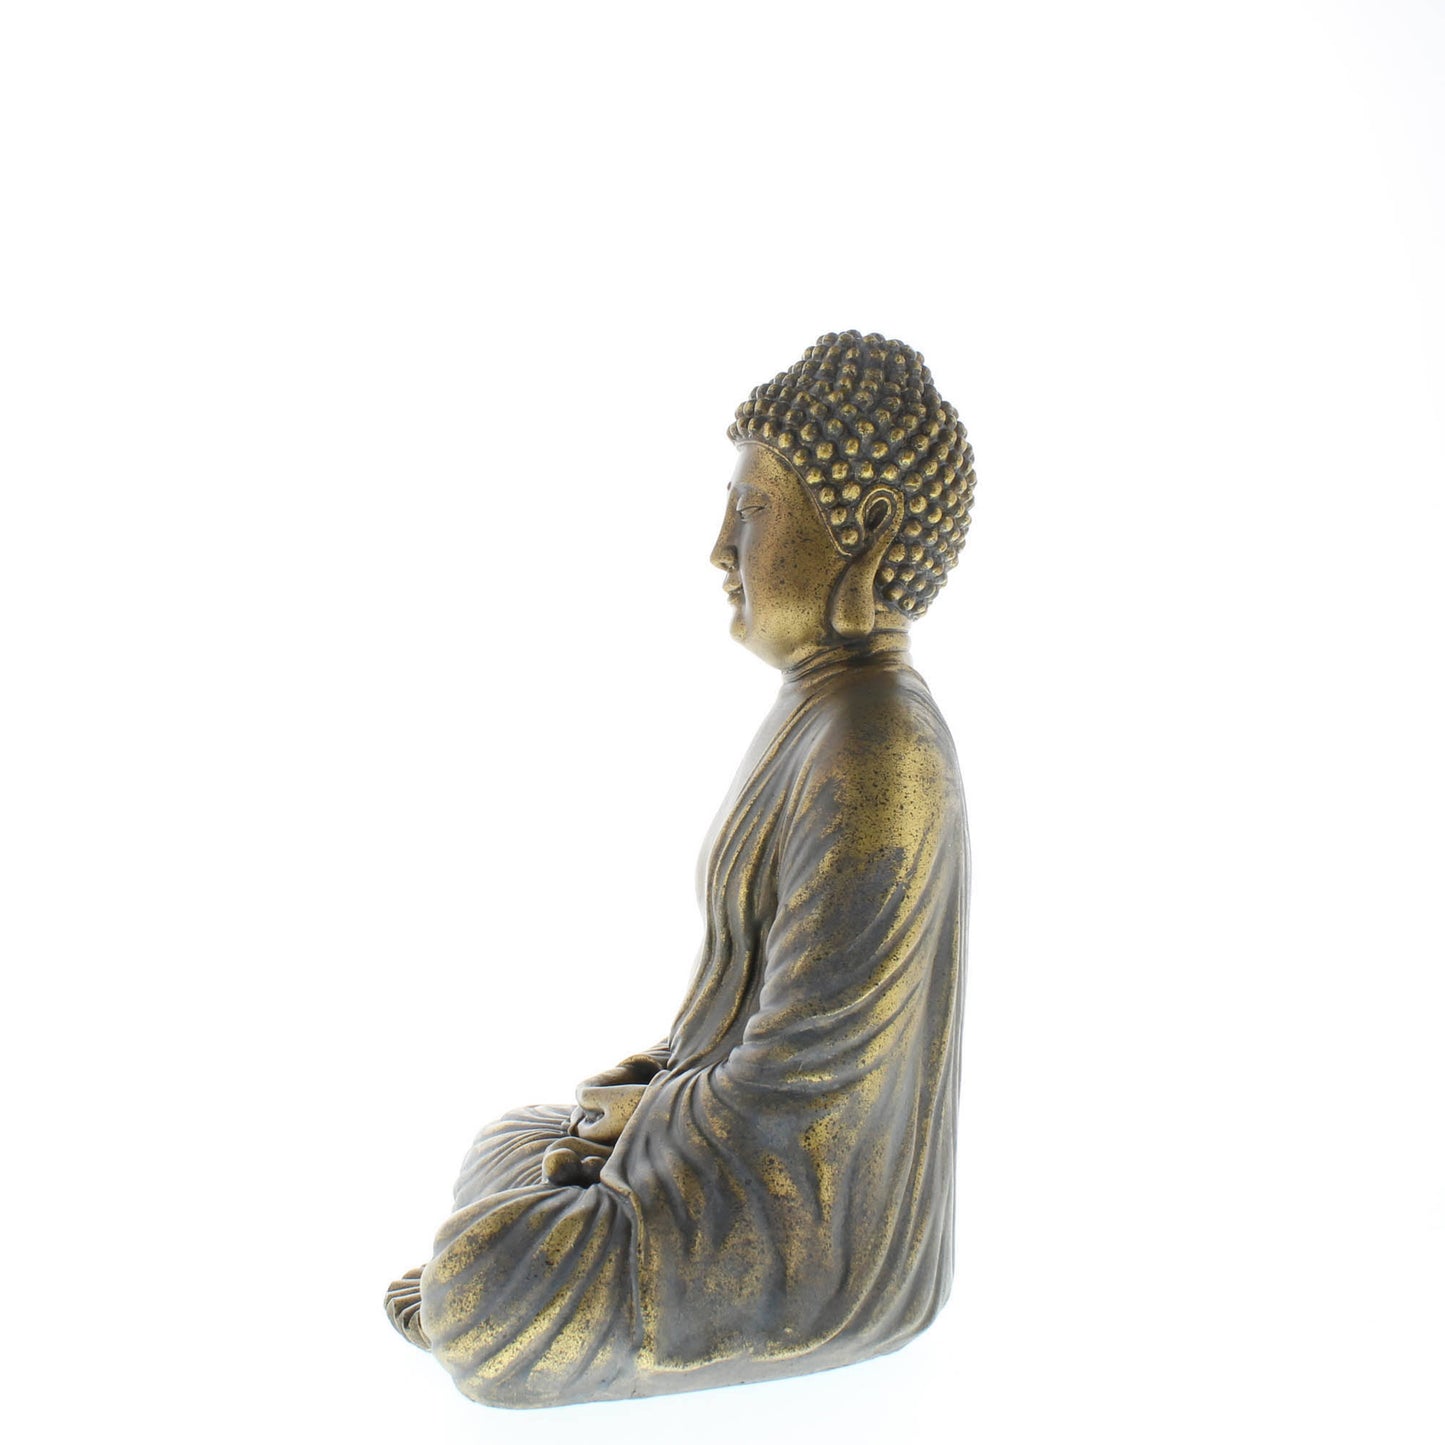 Meditating Sitting Zen Buddha Statue Seated Lotus Position Indoor Outdoor Home Decor Golden Finish